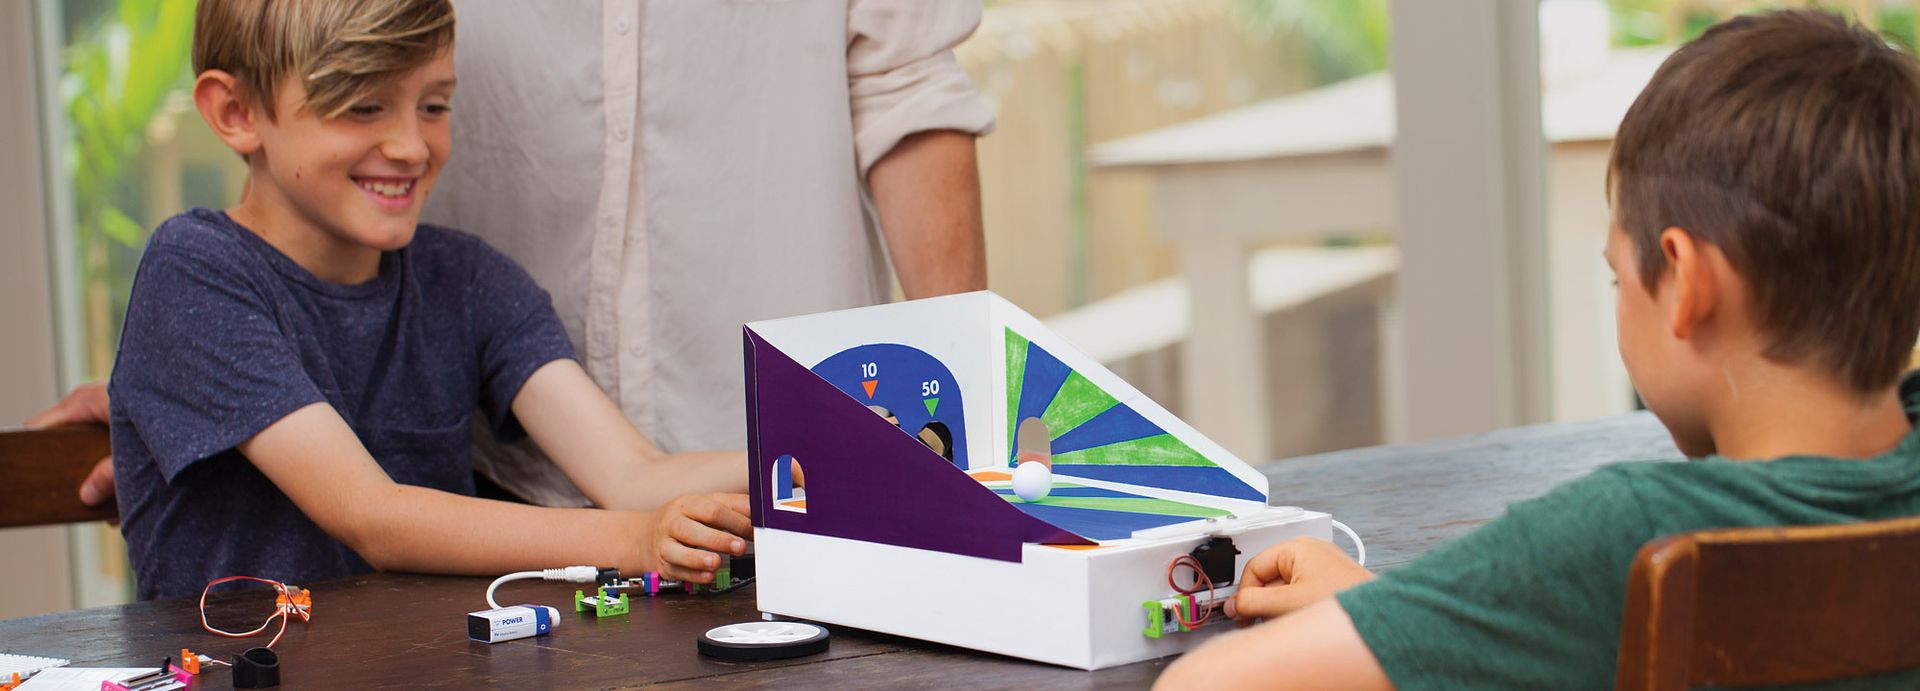 littleBits Gizmos & Gadgets kit: Bumperball project